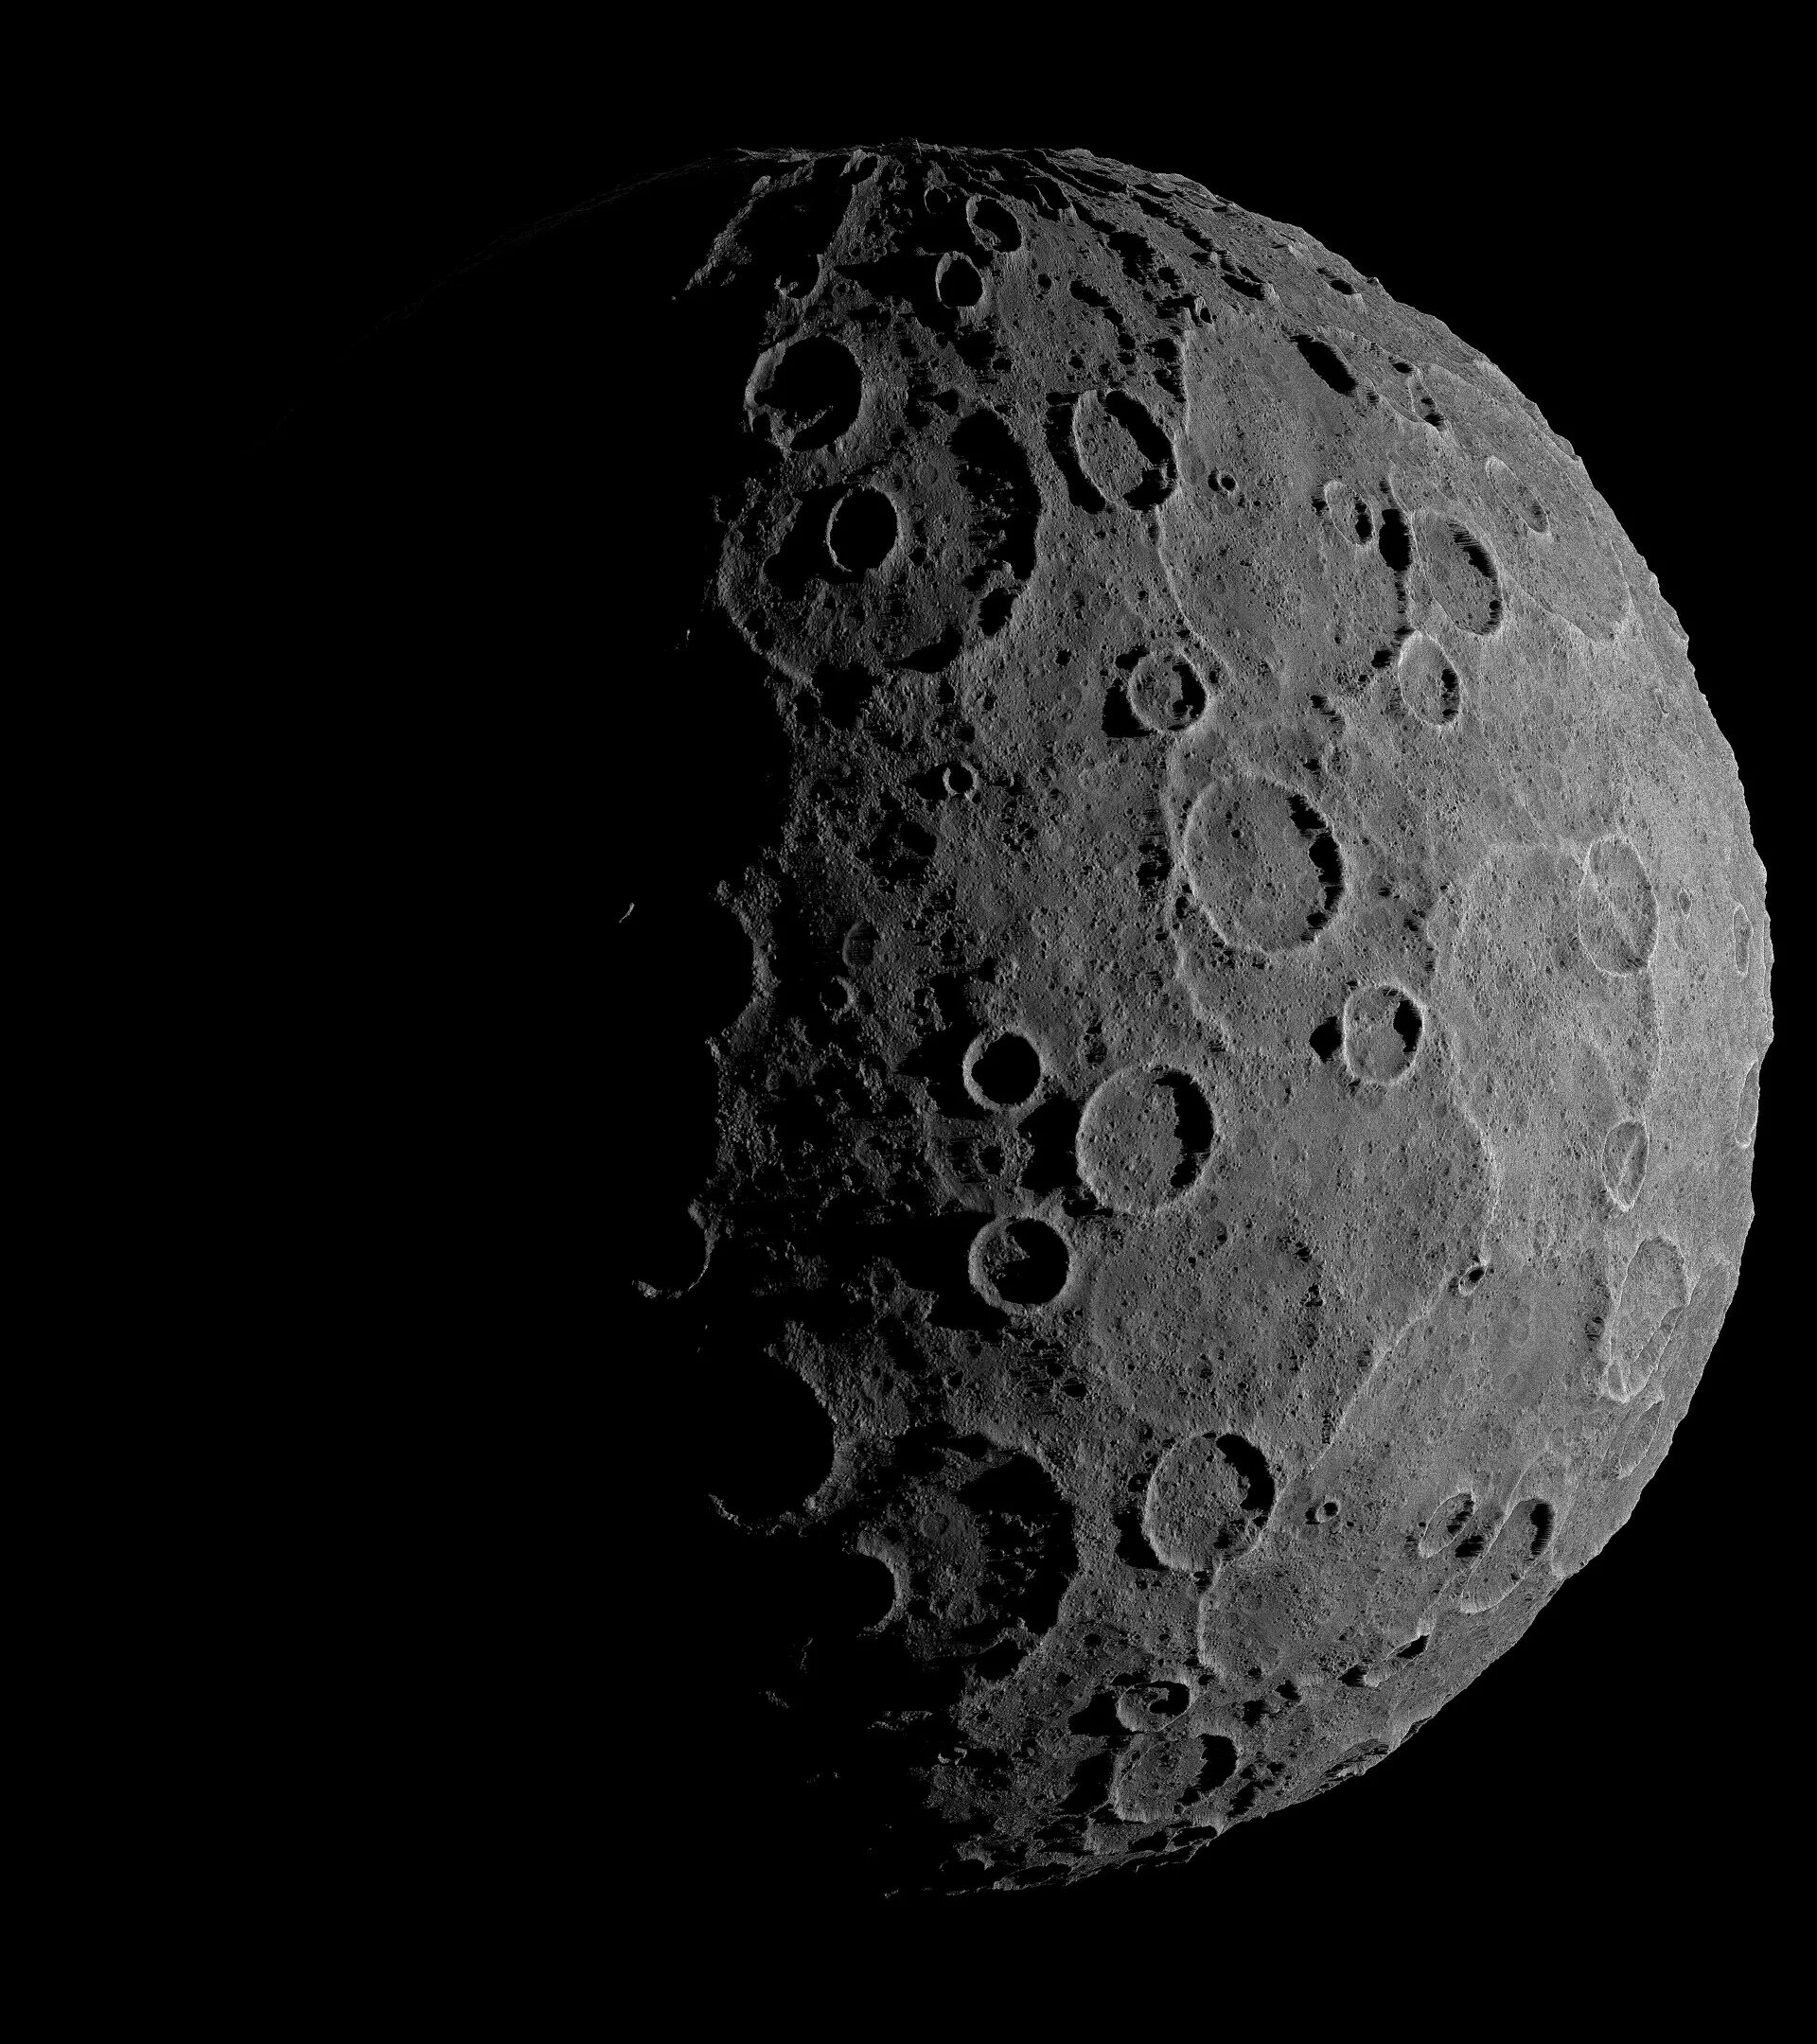 Кратеры на Луне. Поверхность Луны кратеры. Лунный кратер Торричелли. Луна вблизи.